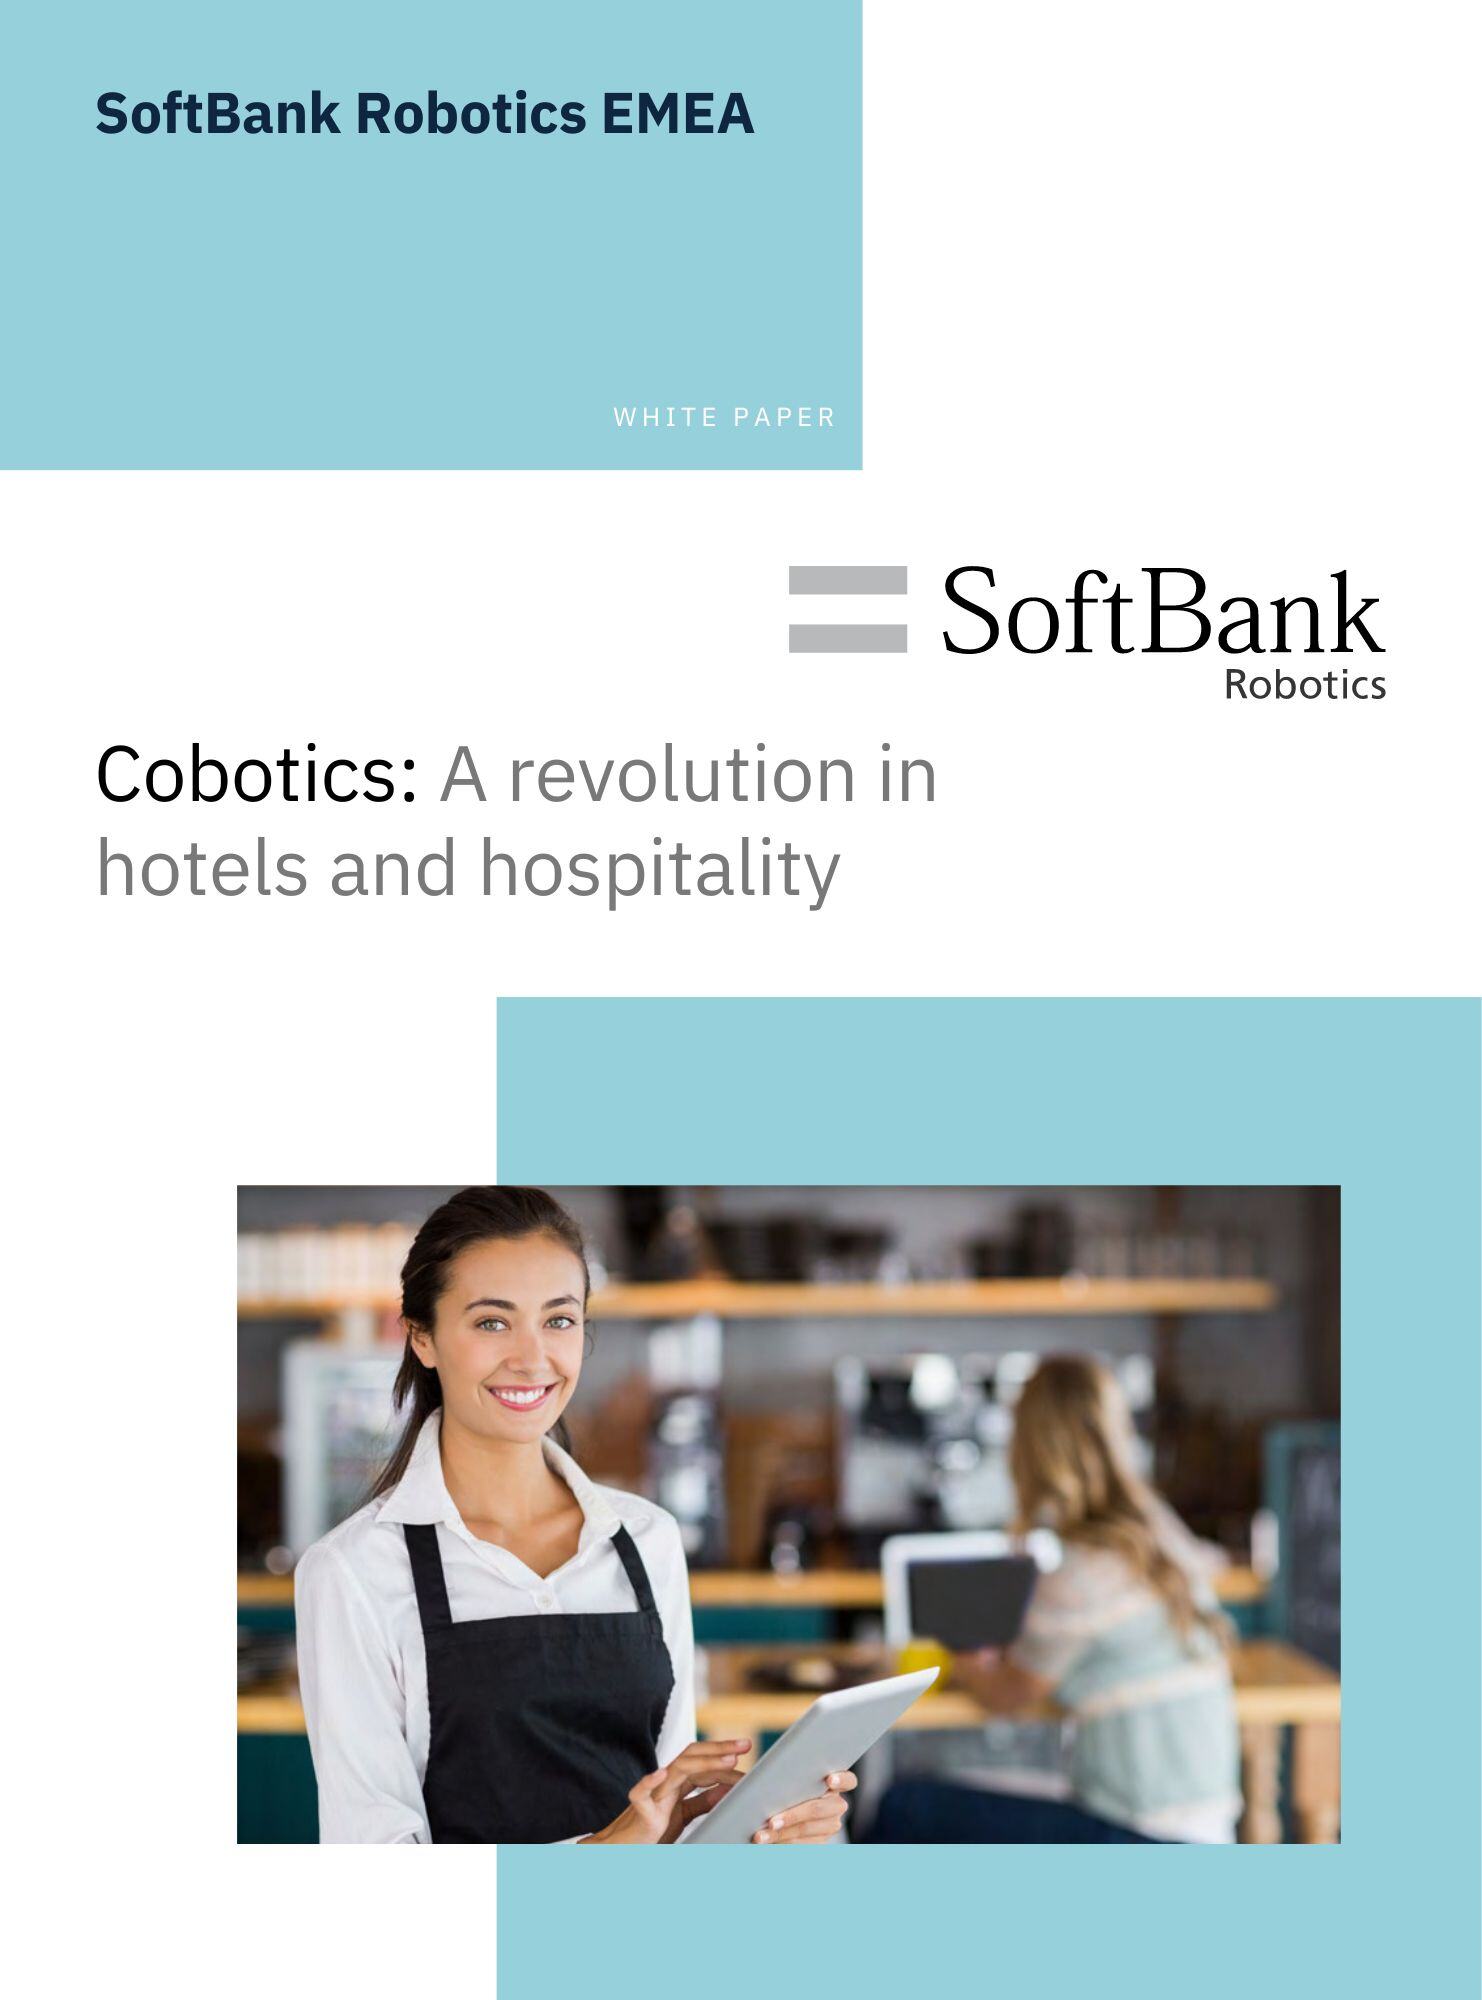 Softbank Robotics EMEA - Cobots - A new revolution in hospitality (1) (1).pdf